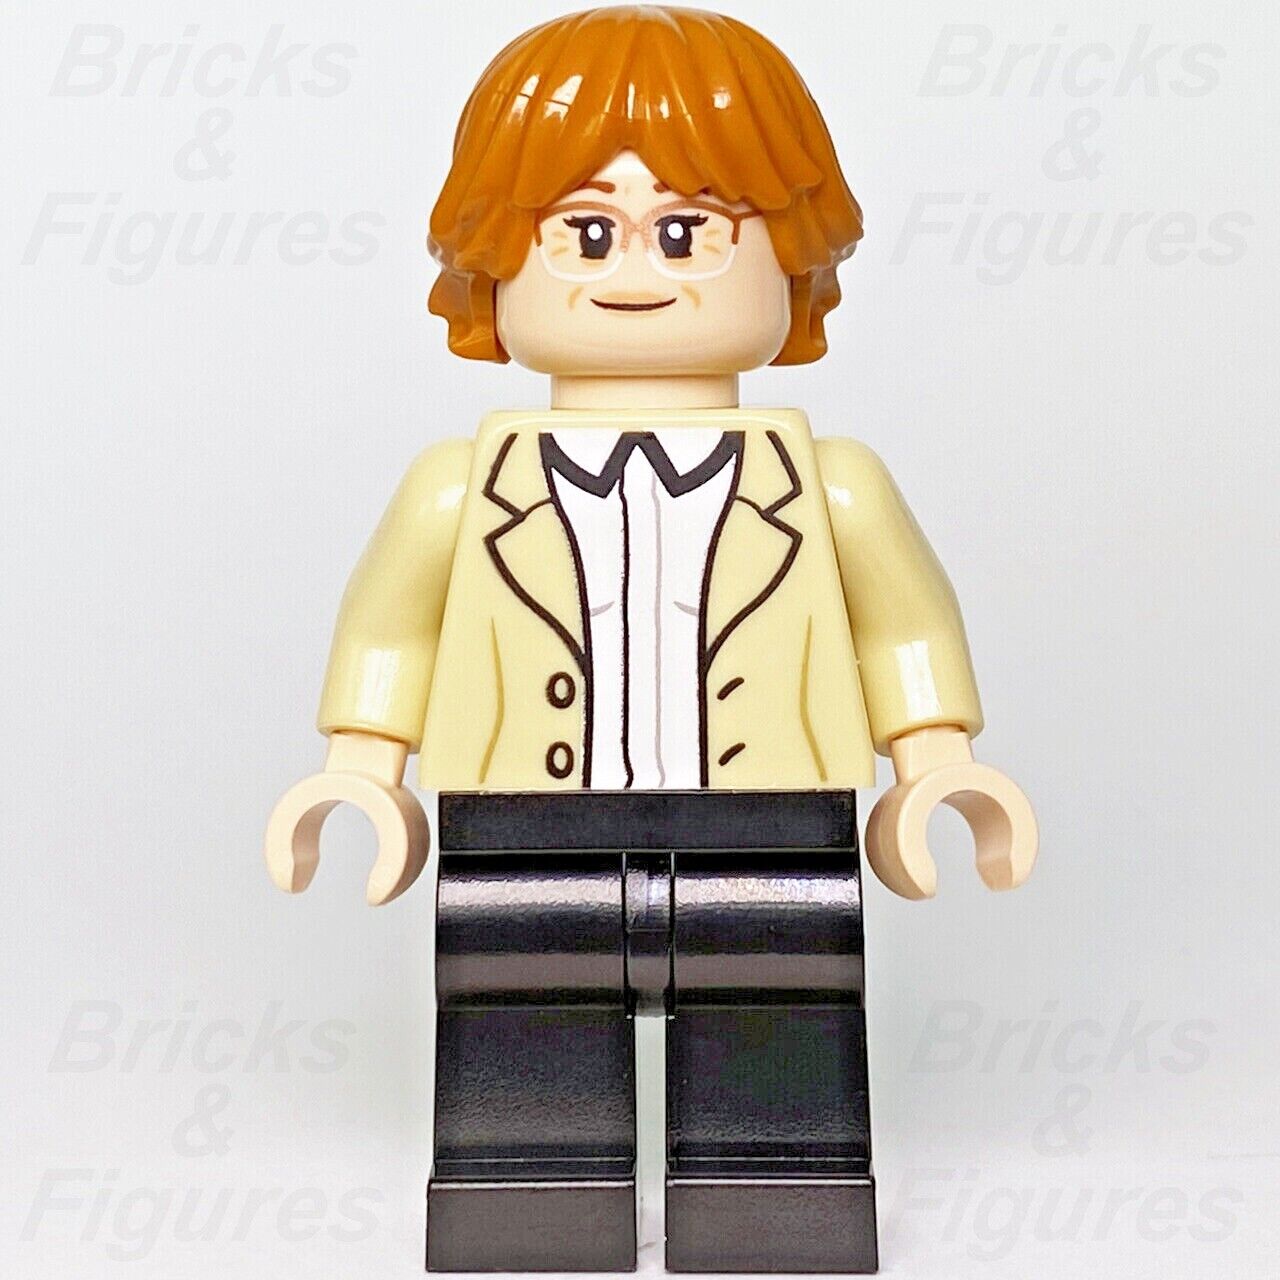 LEGO Kathi Dooley After Makeover Queer Eye Creator Minifigure 10291 que007 New - Bricks & Figures